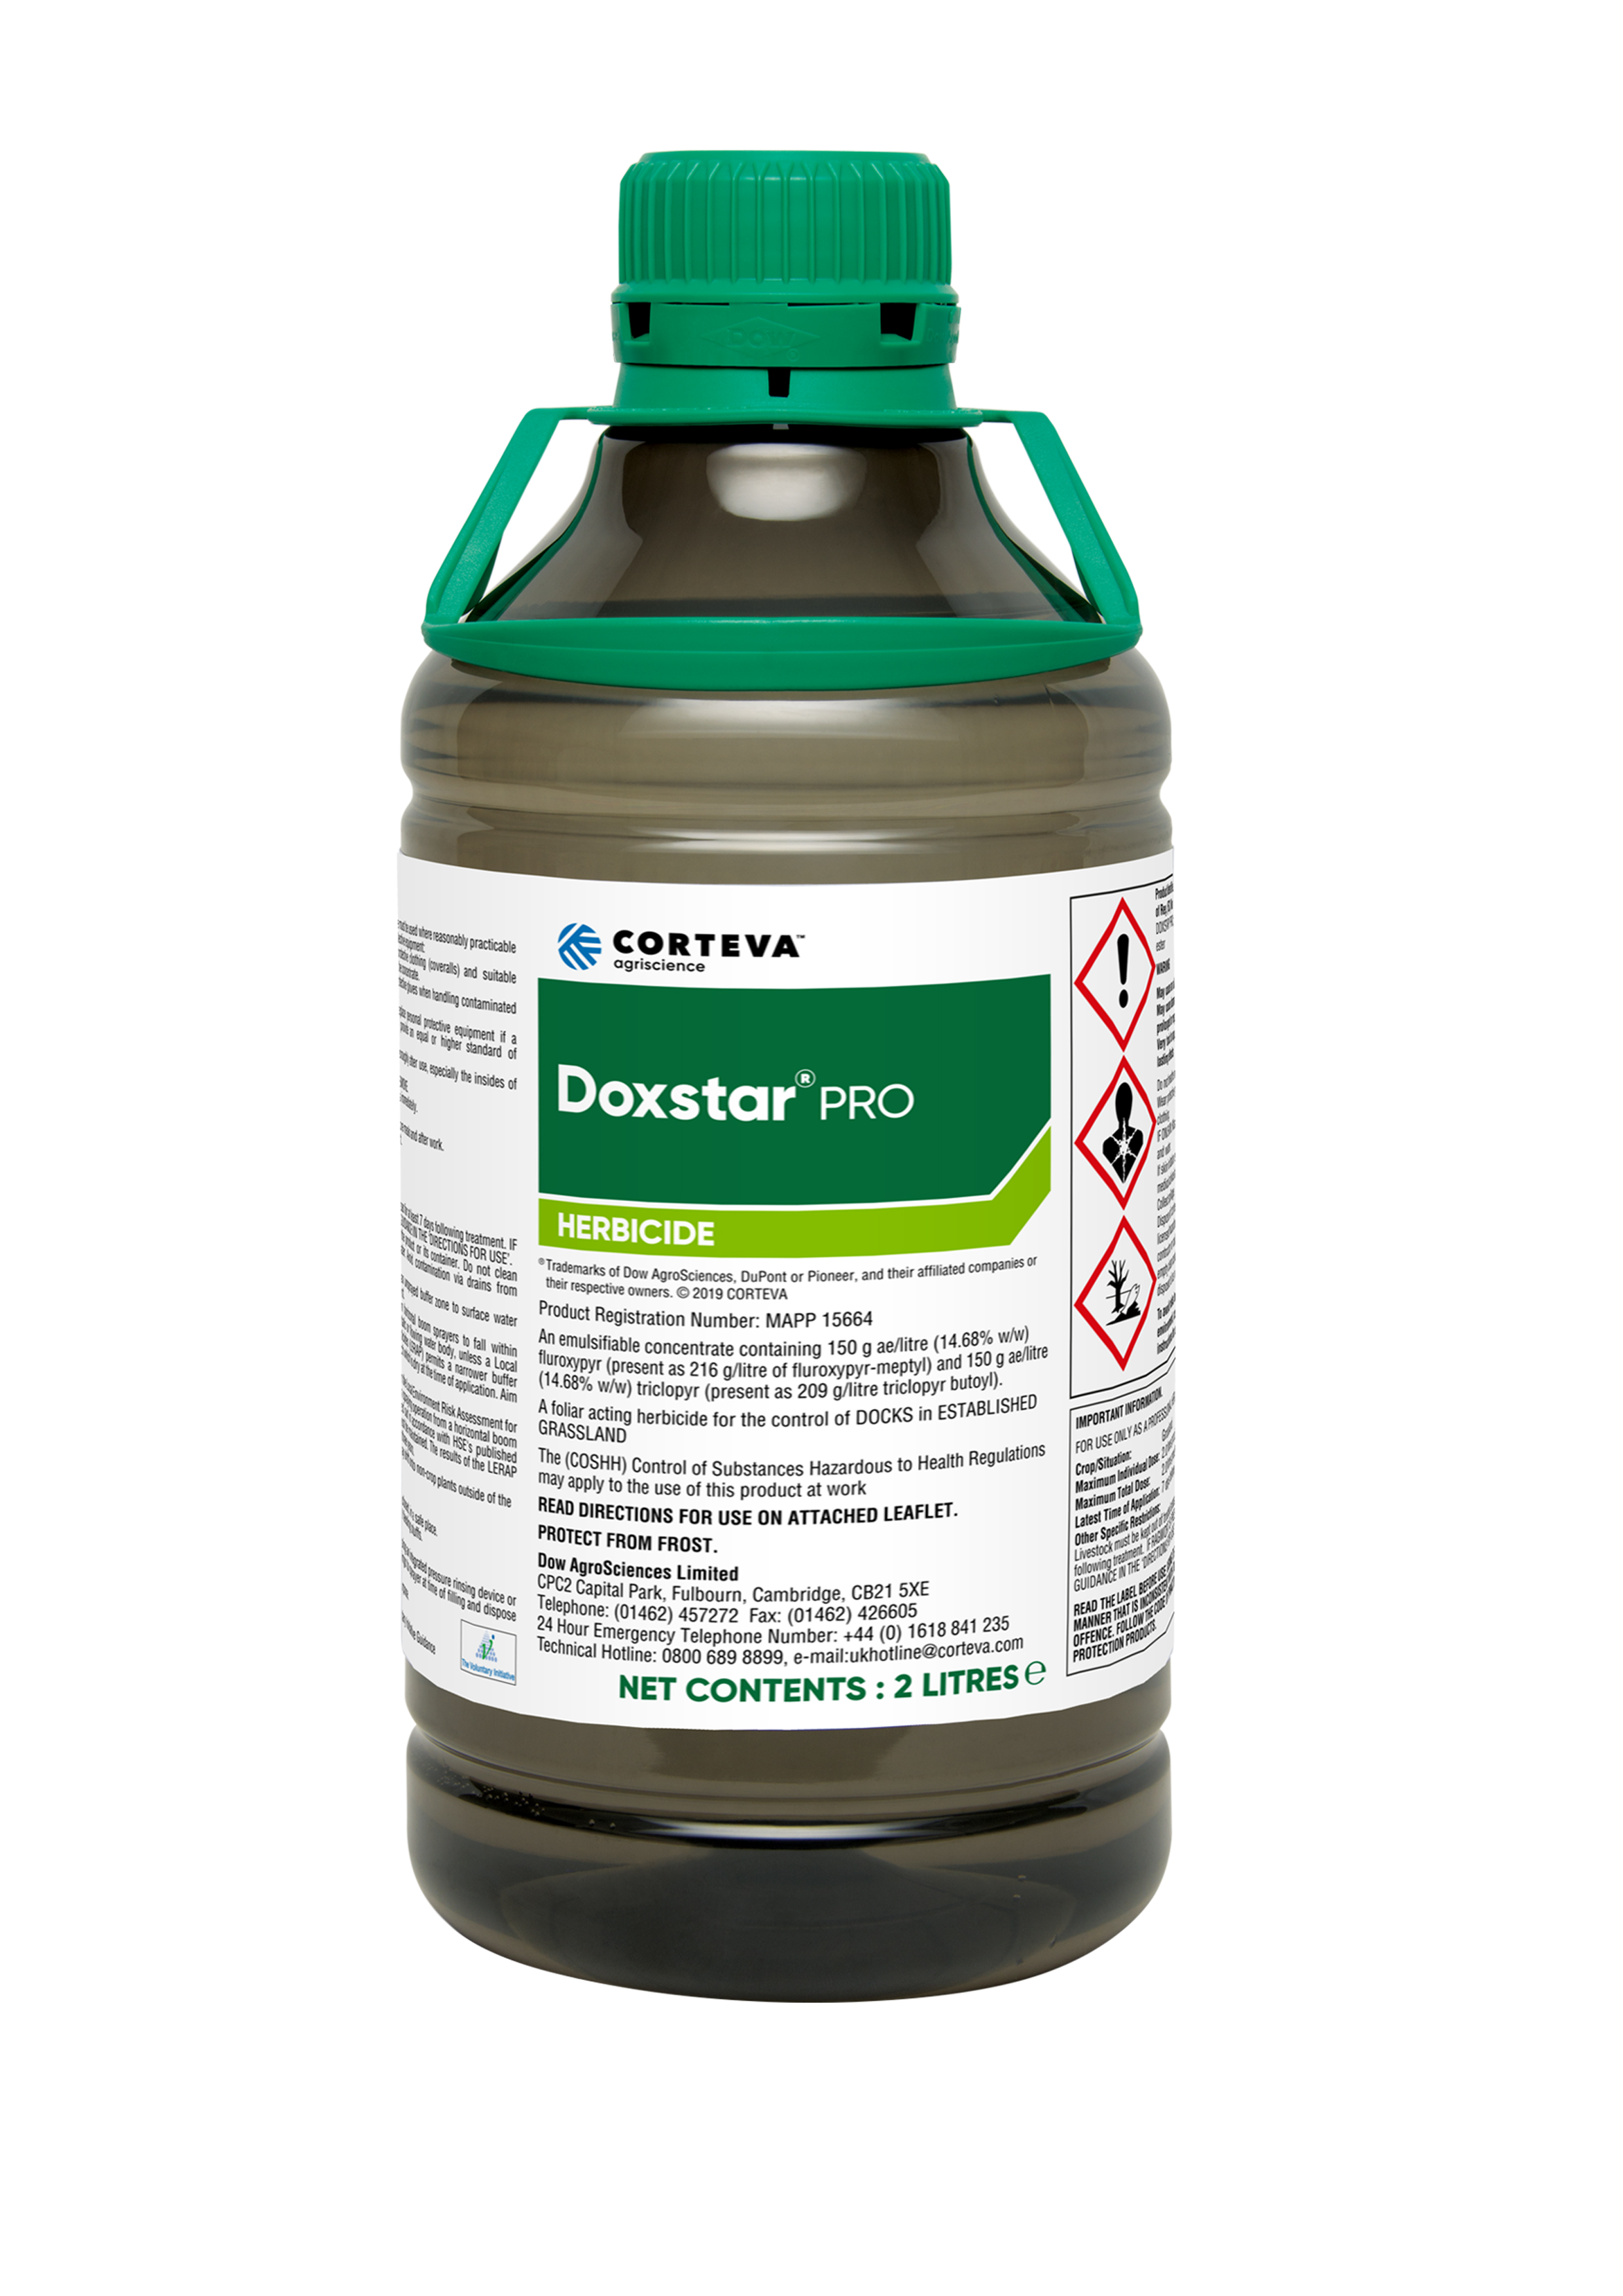 Doxstar product bottle